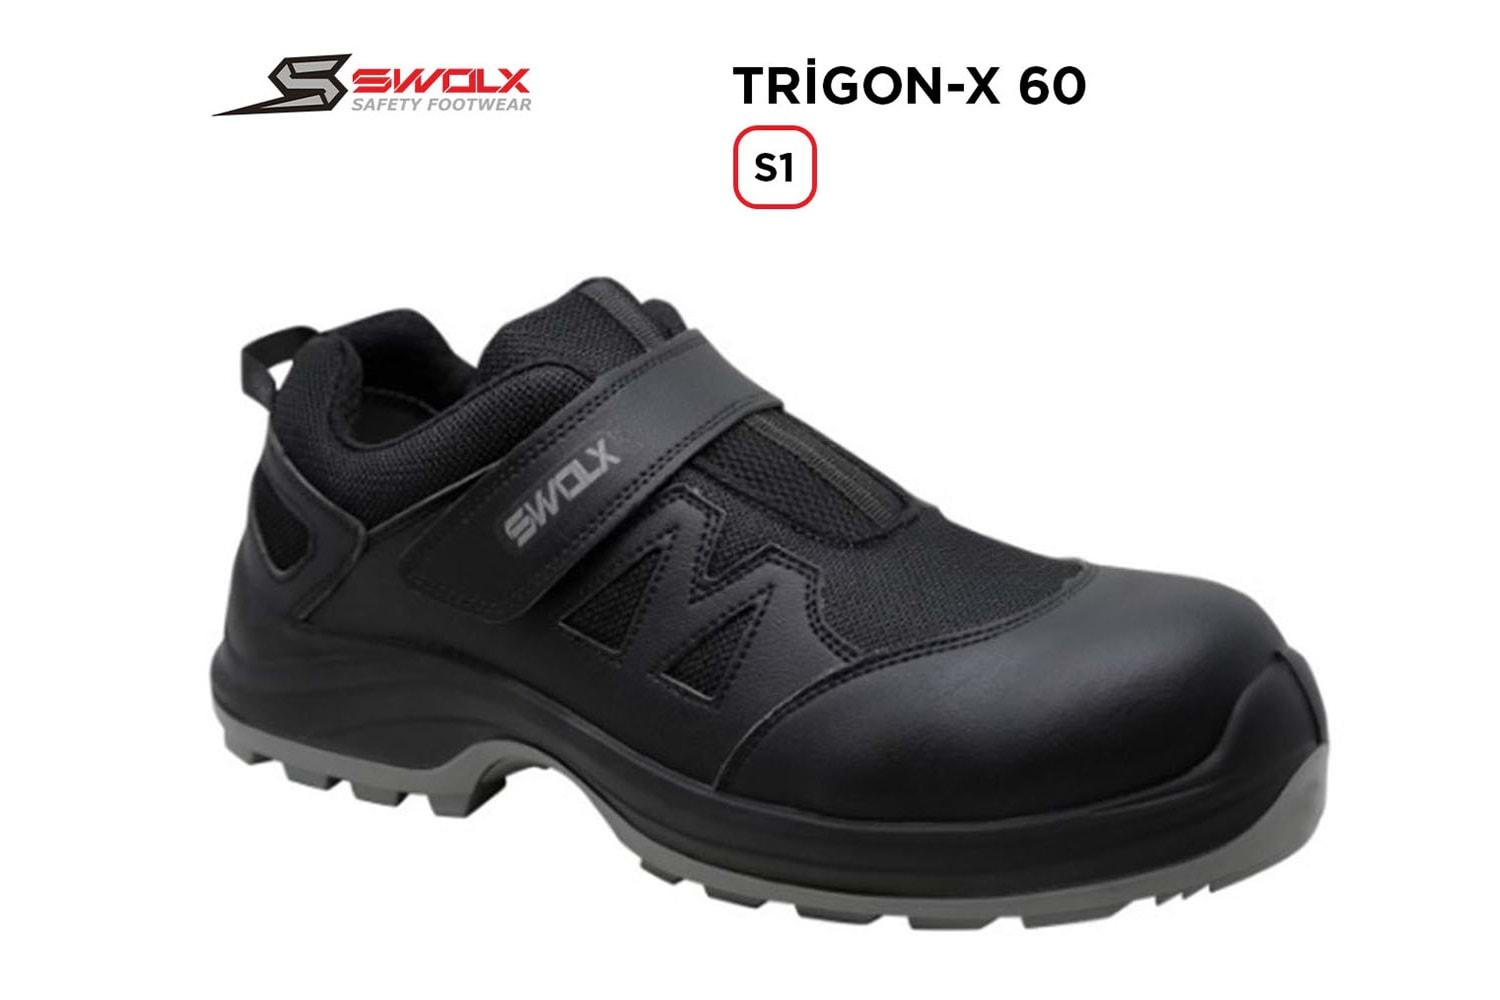 Swolx İş Ayakkabısı - Trigon-X 60 S1 Elektrikçi - 42